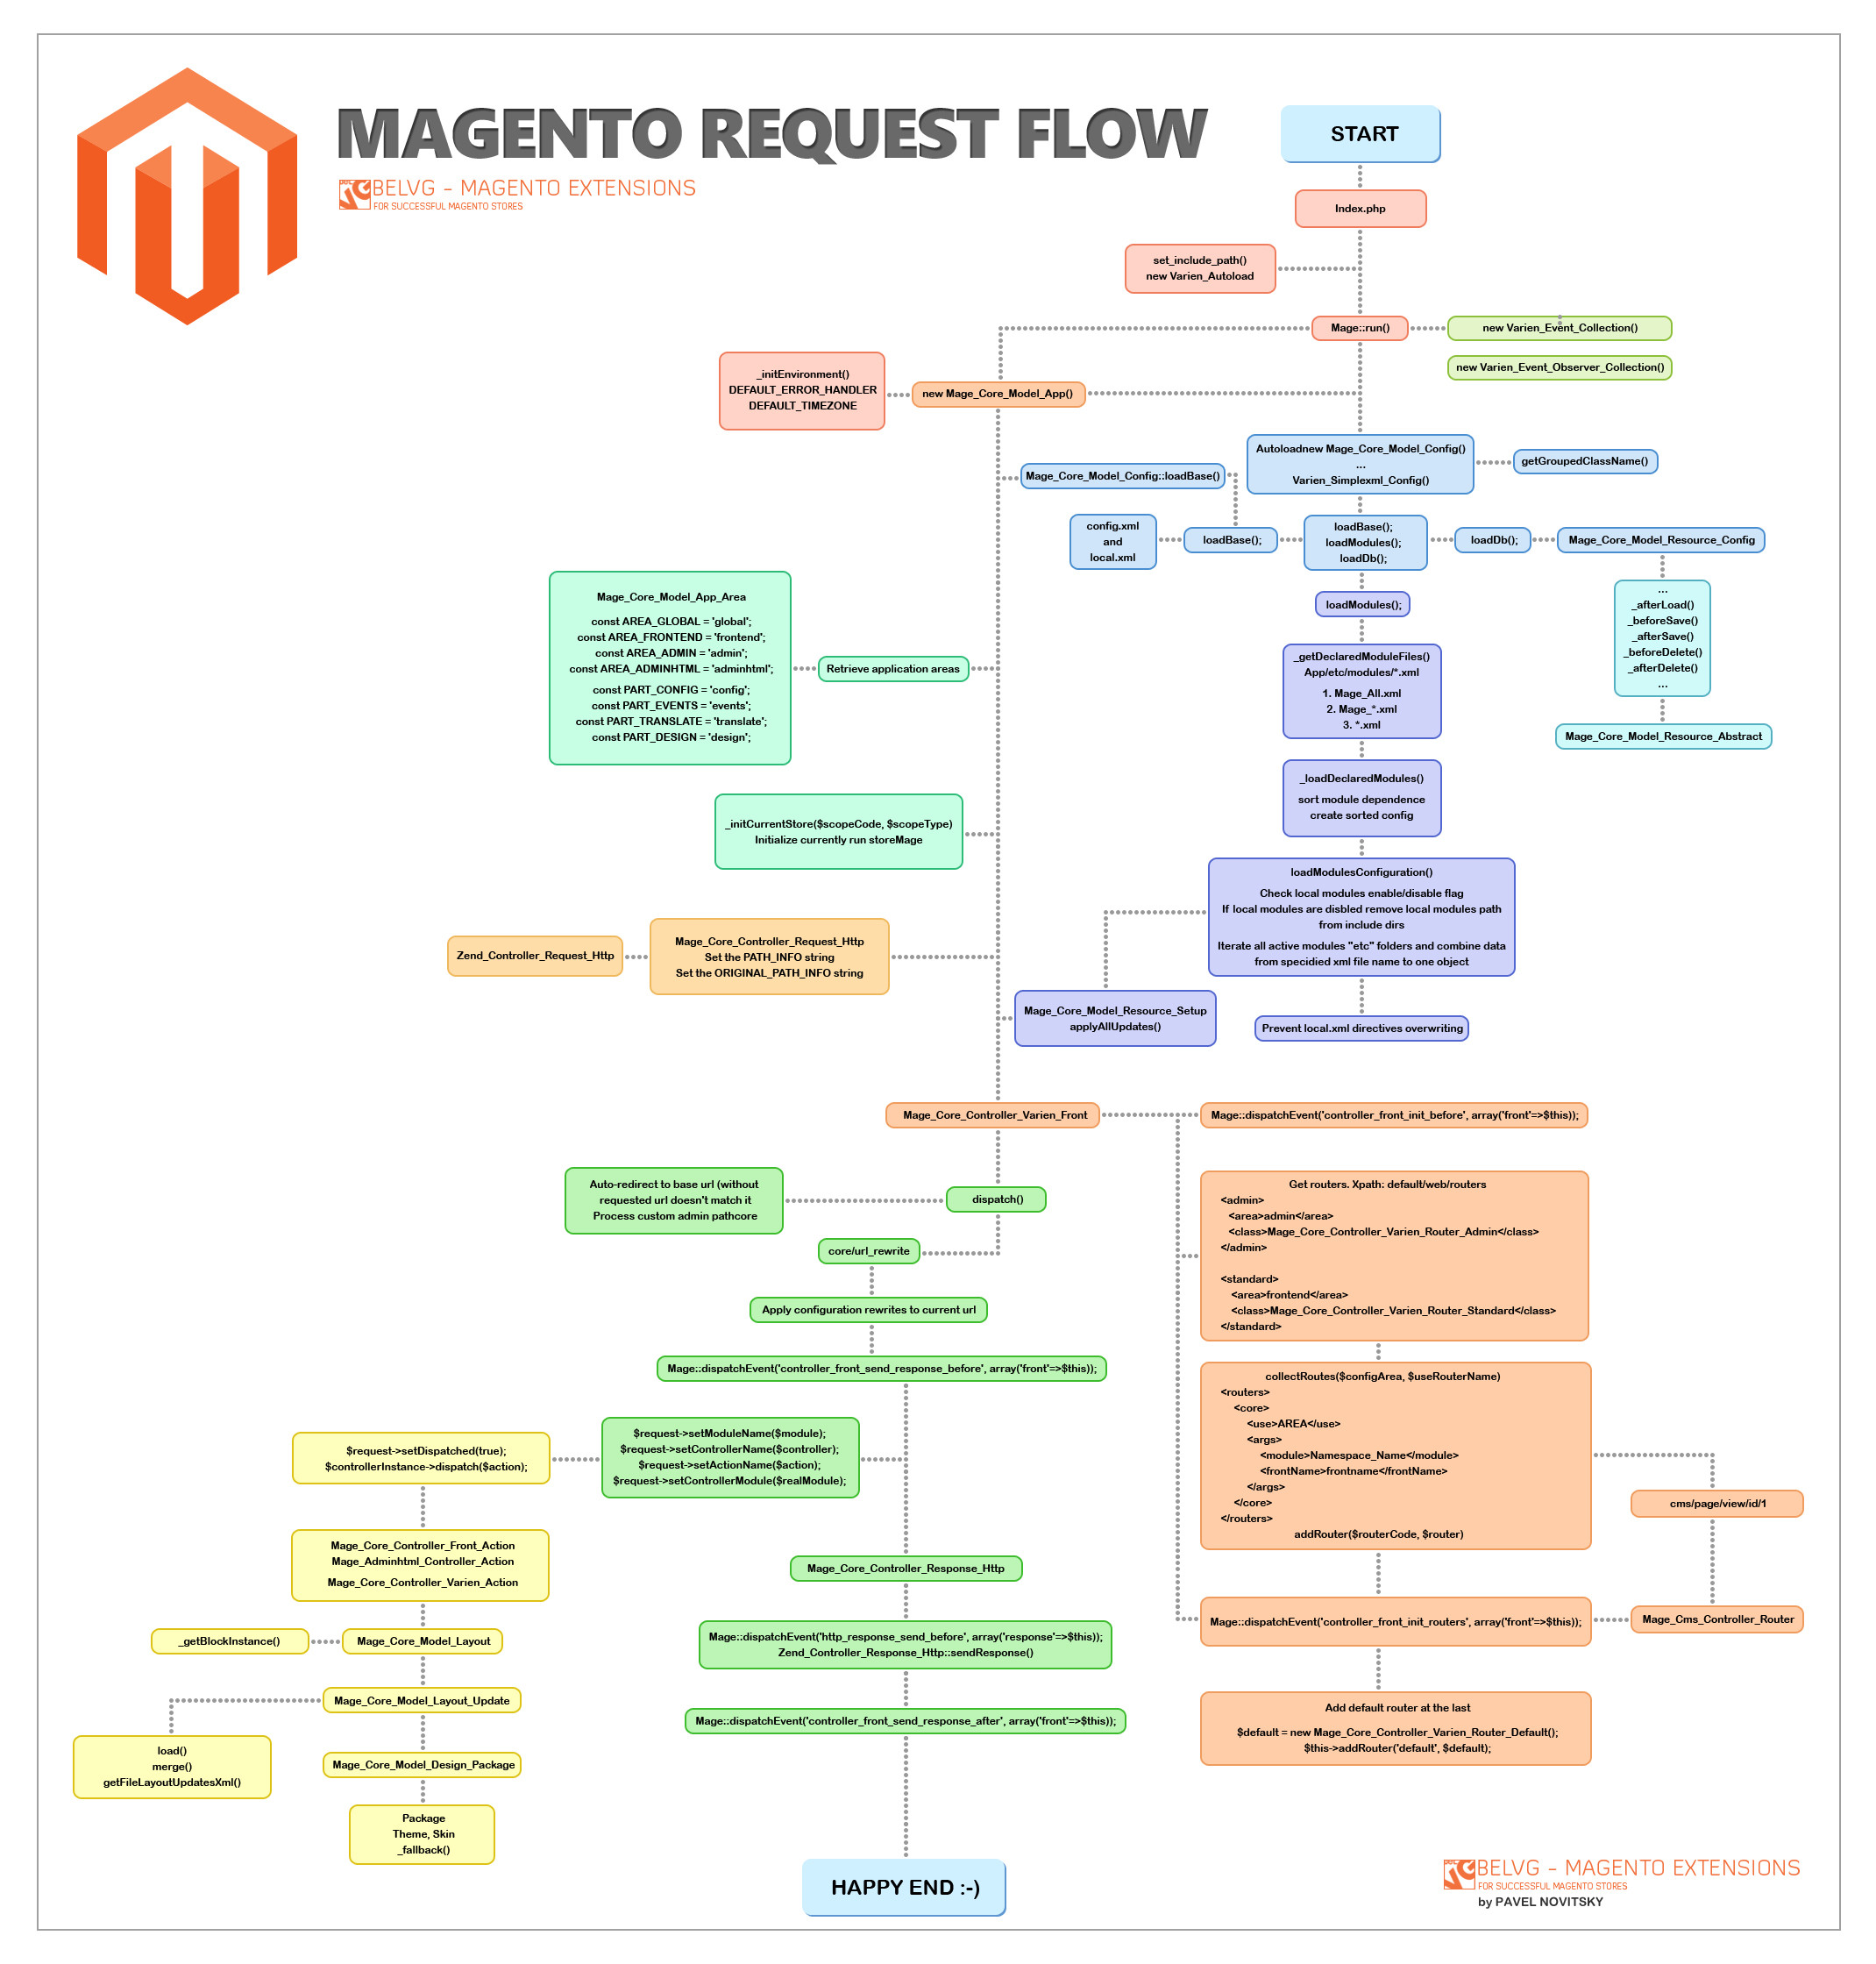 Magento request flow